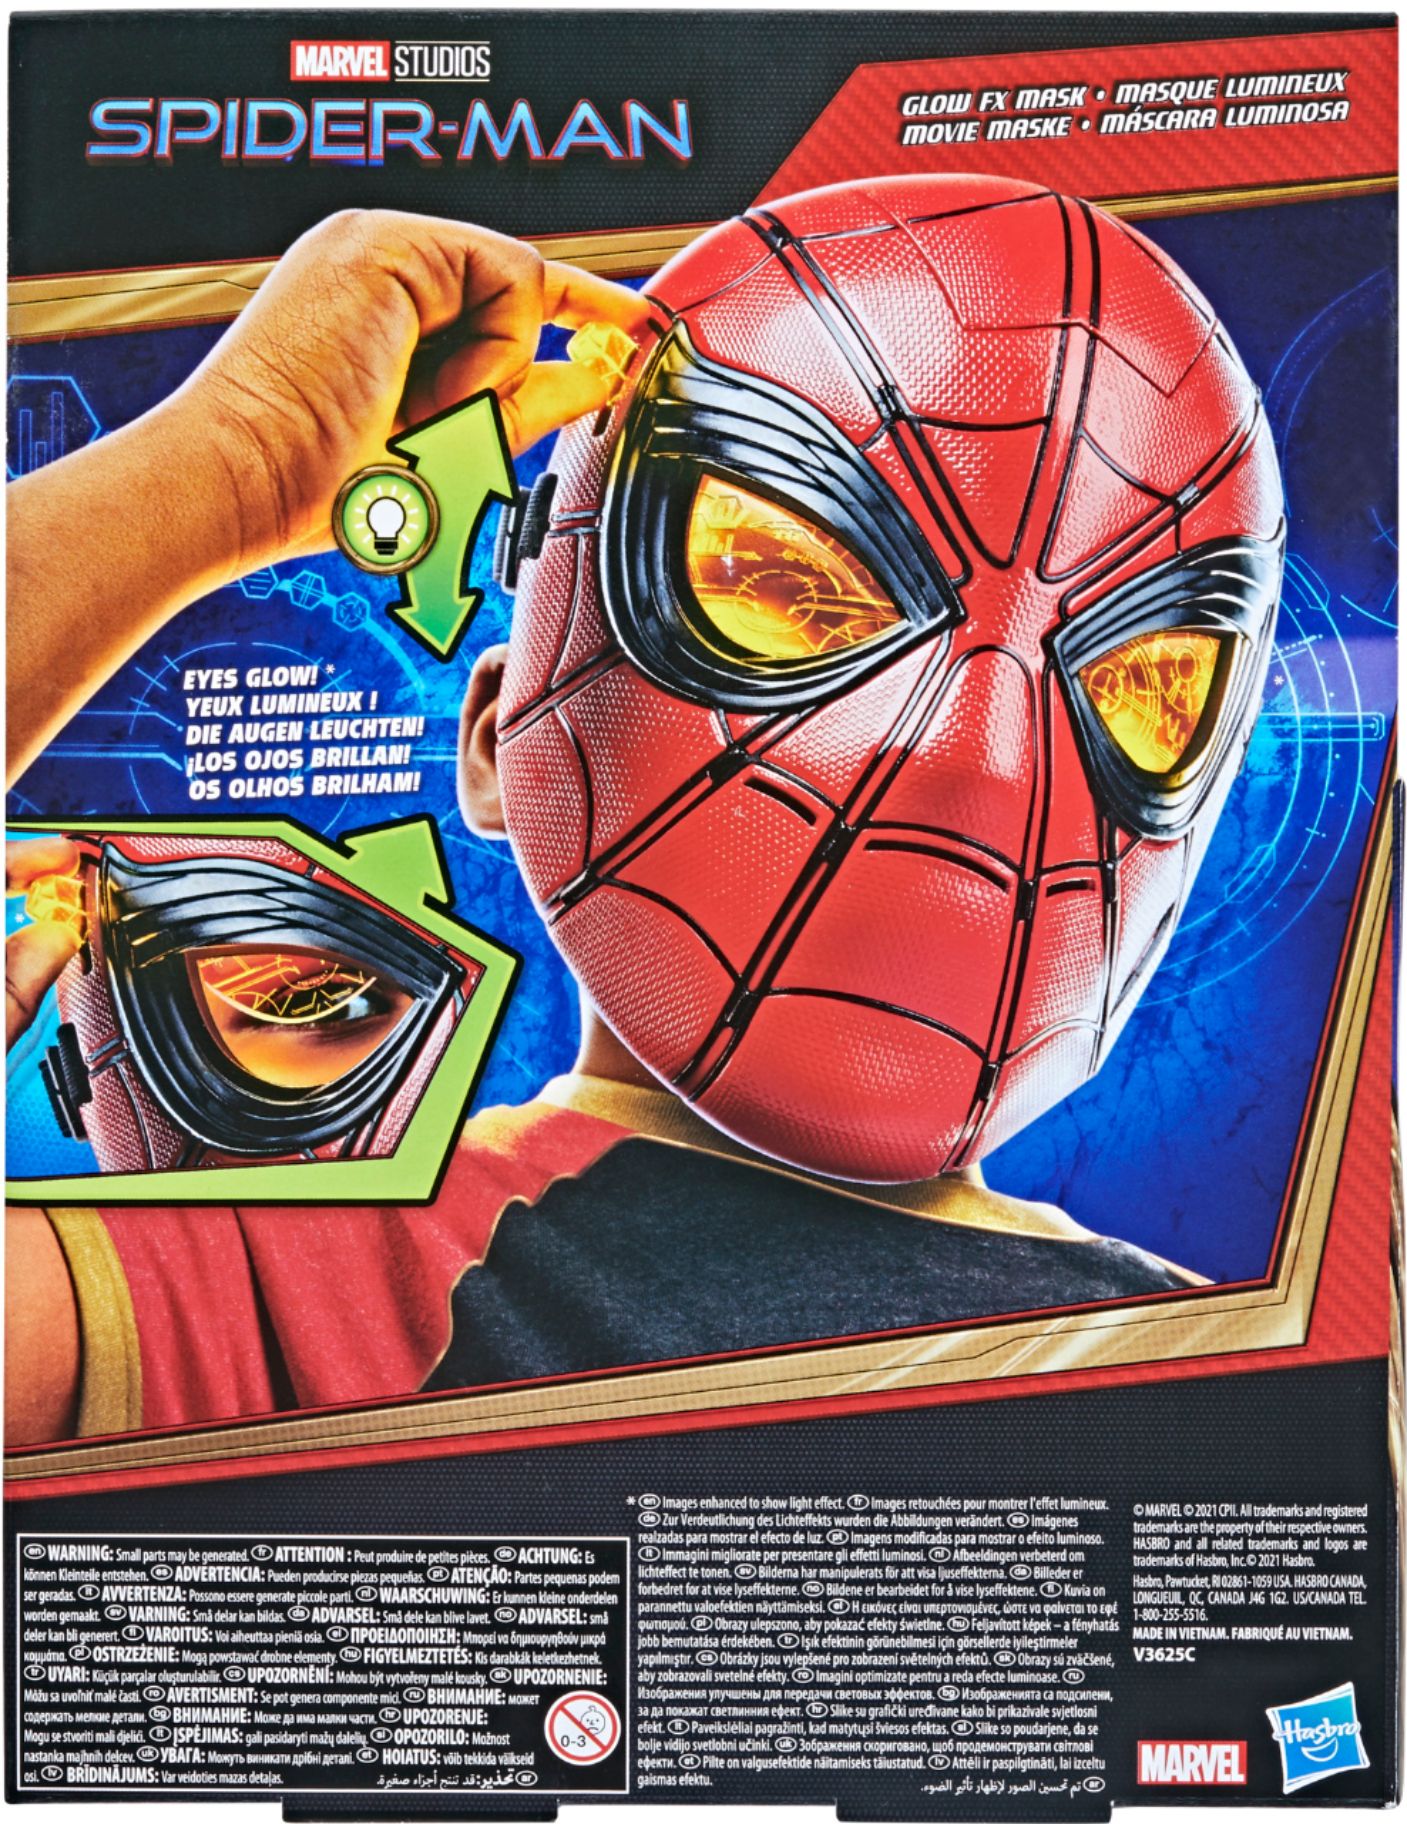 Masque relevable Spiderman — Playfunstore